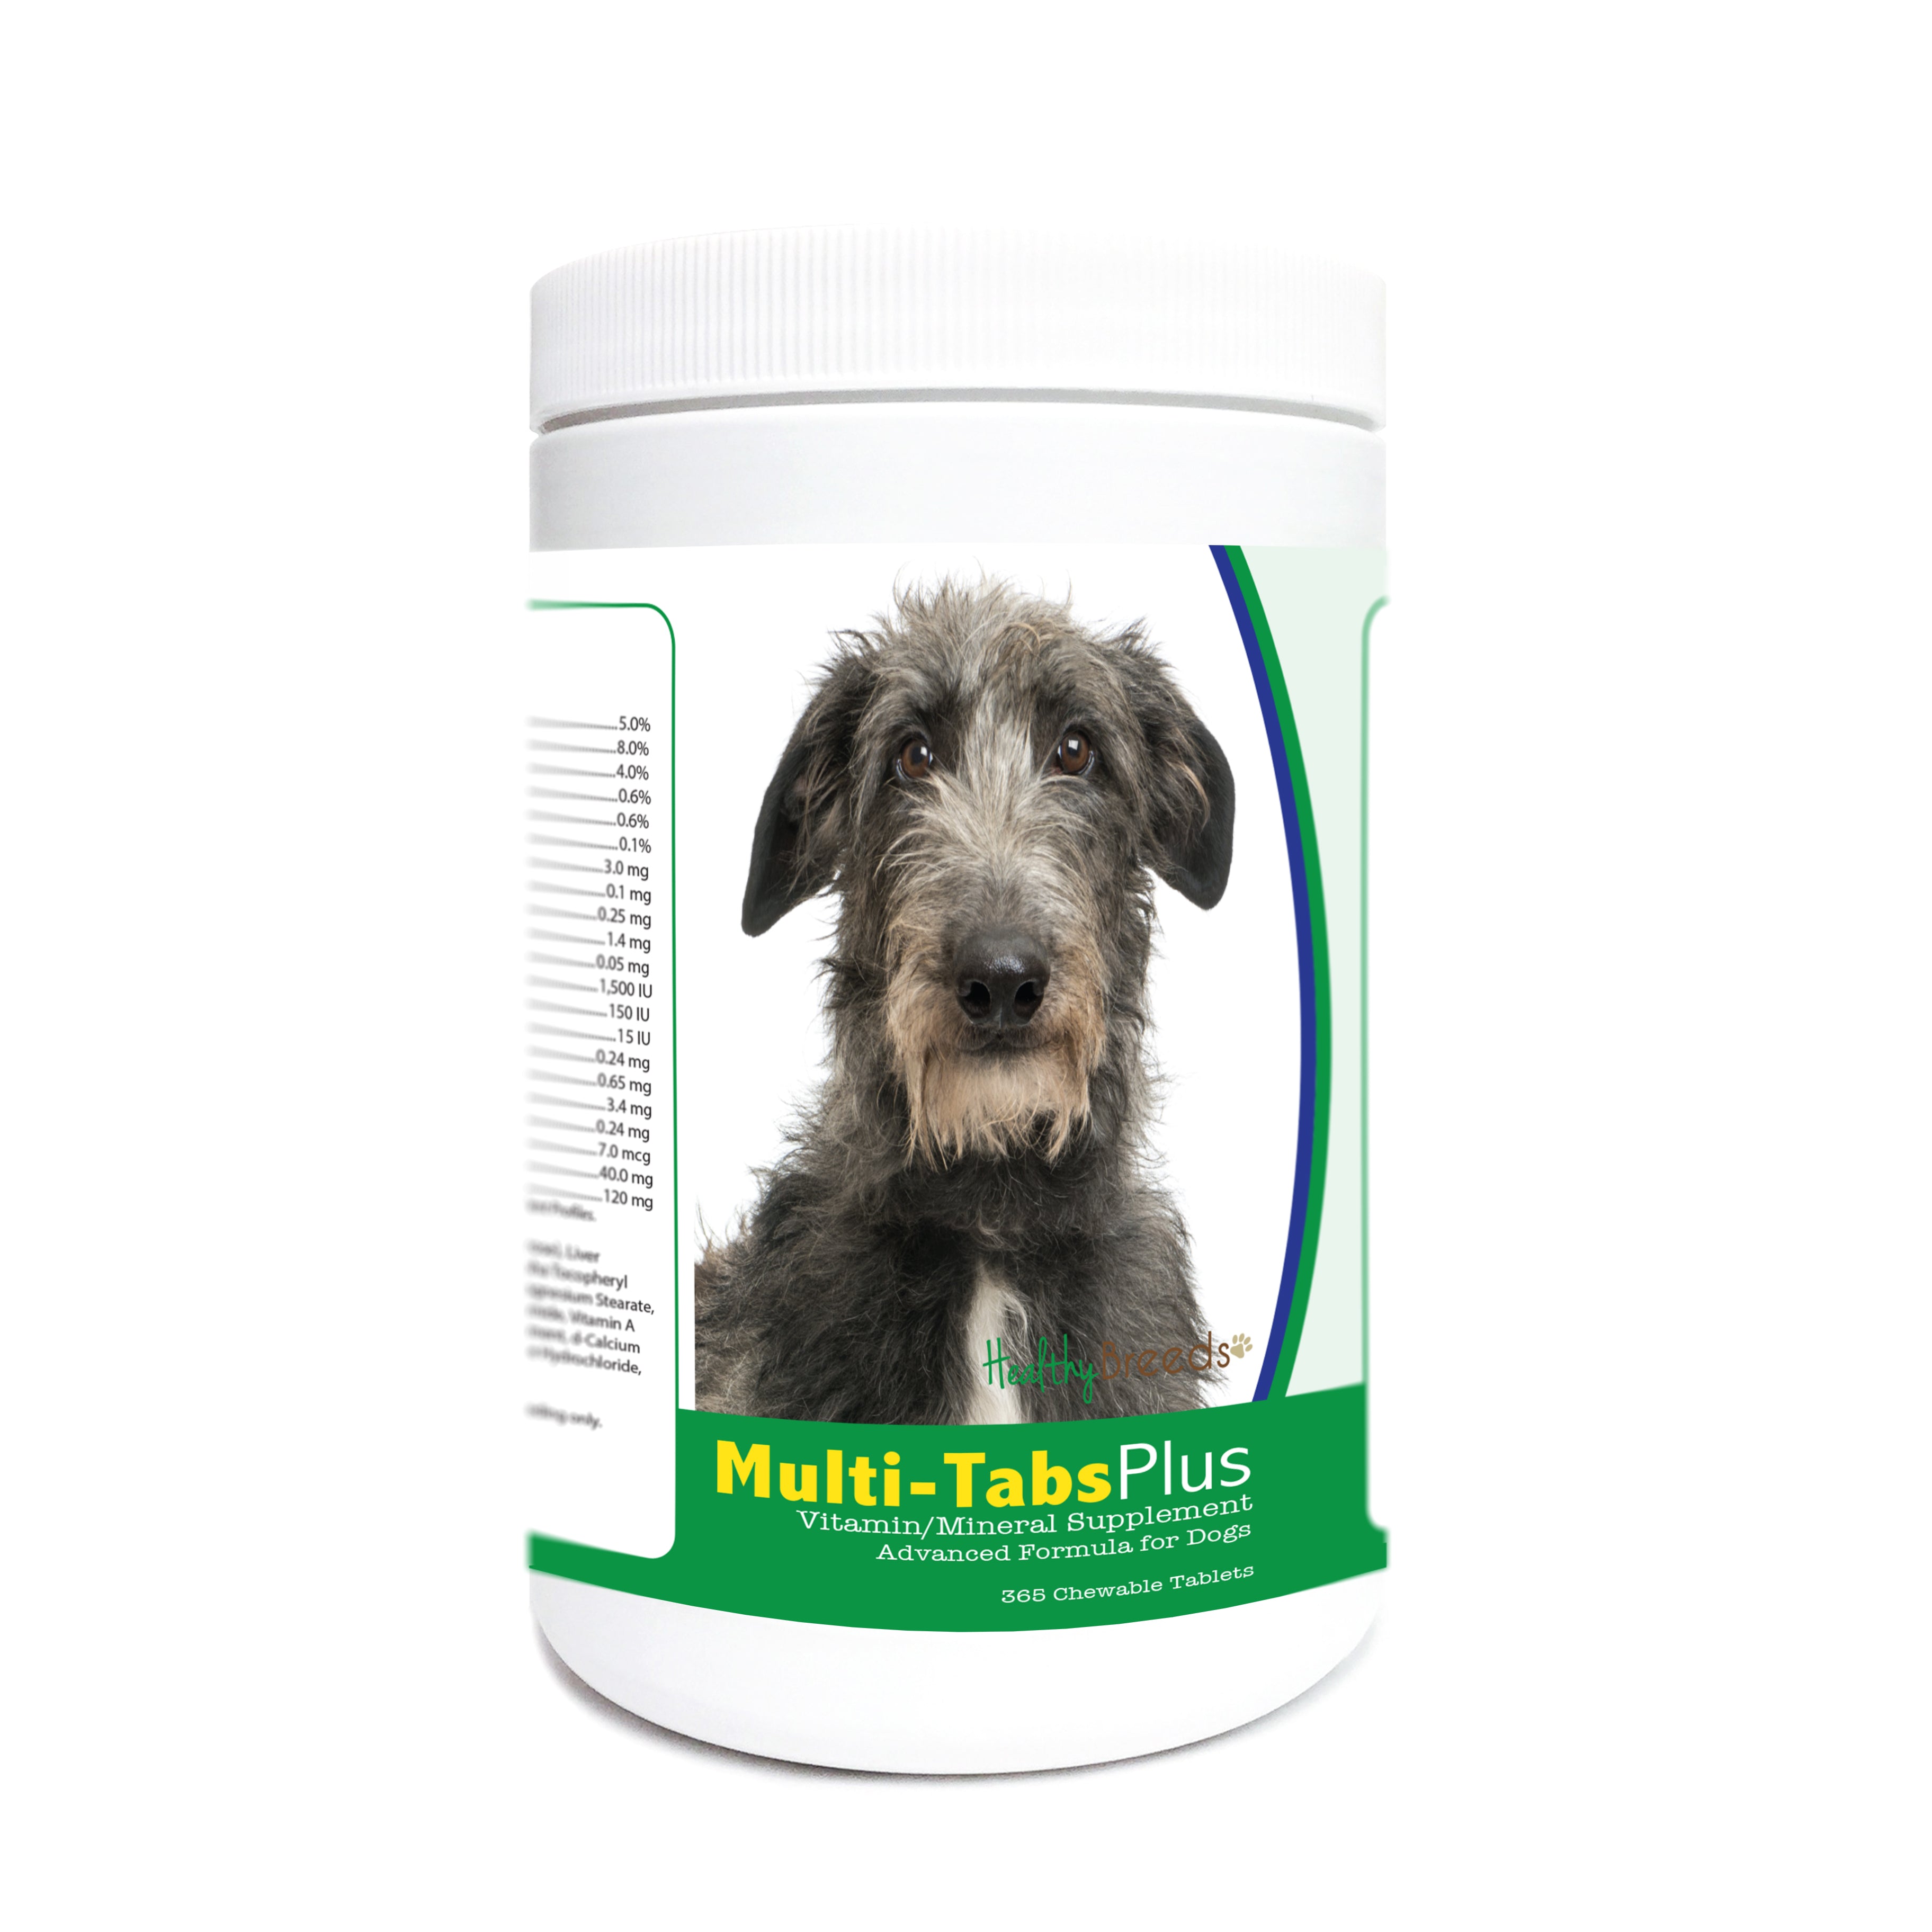 Scottish Deerhound Multi-Tabs Plus Chewable Tablets 365 Count